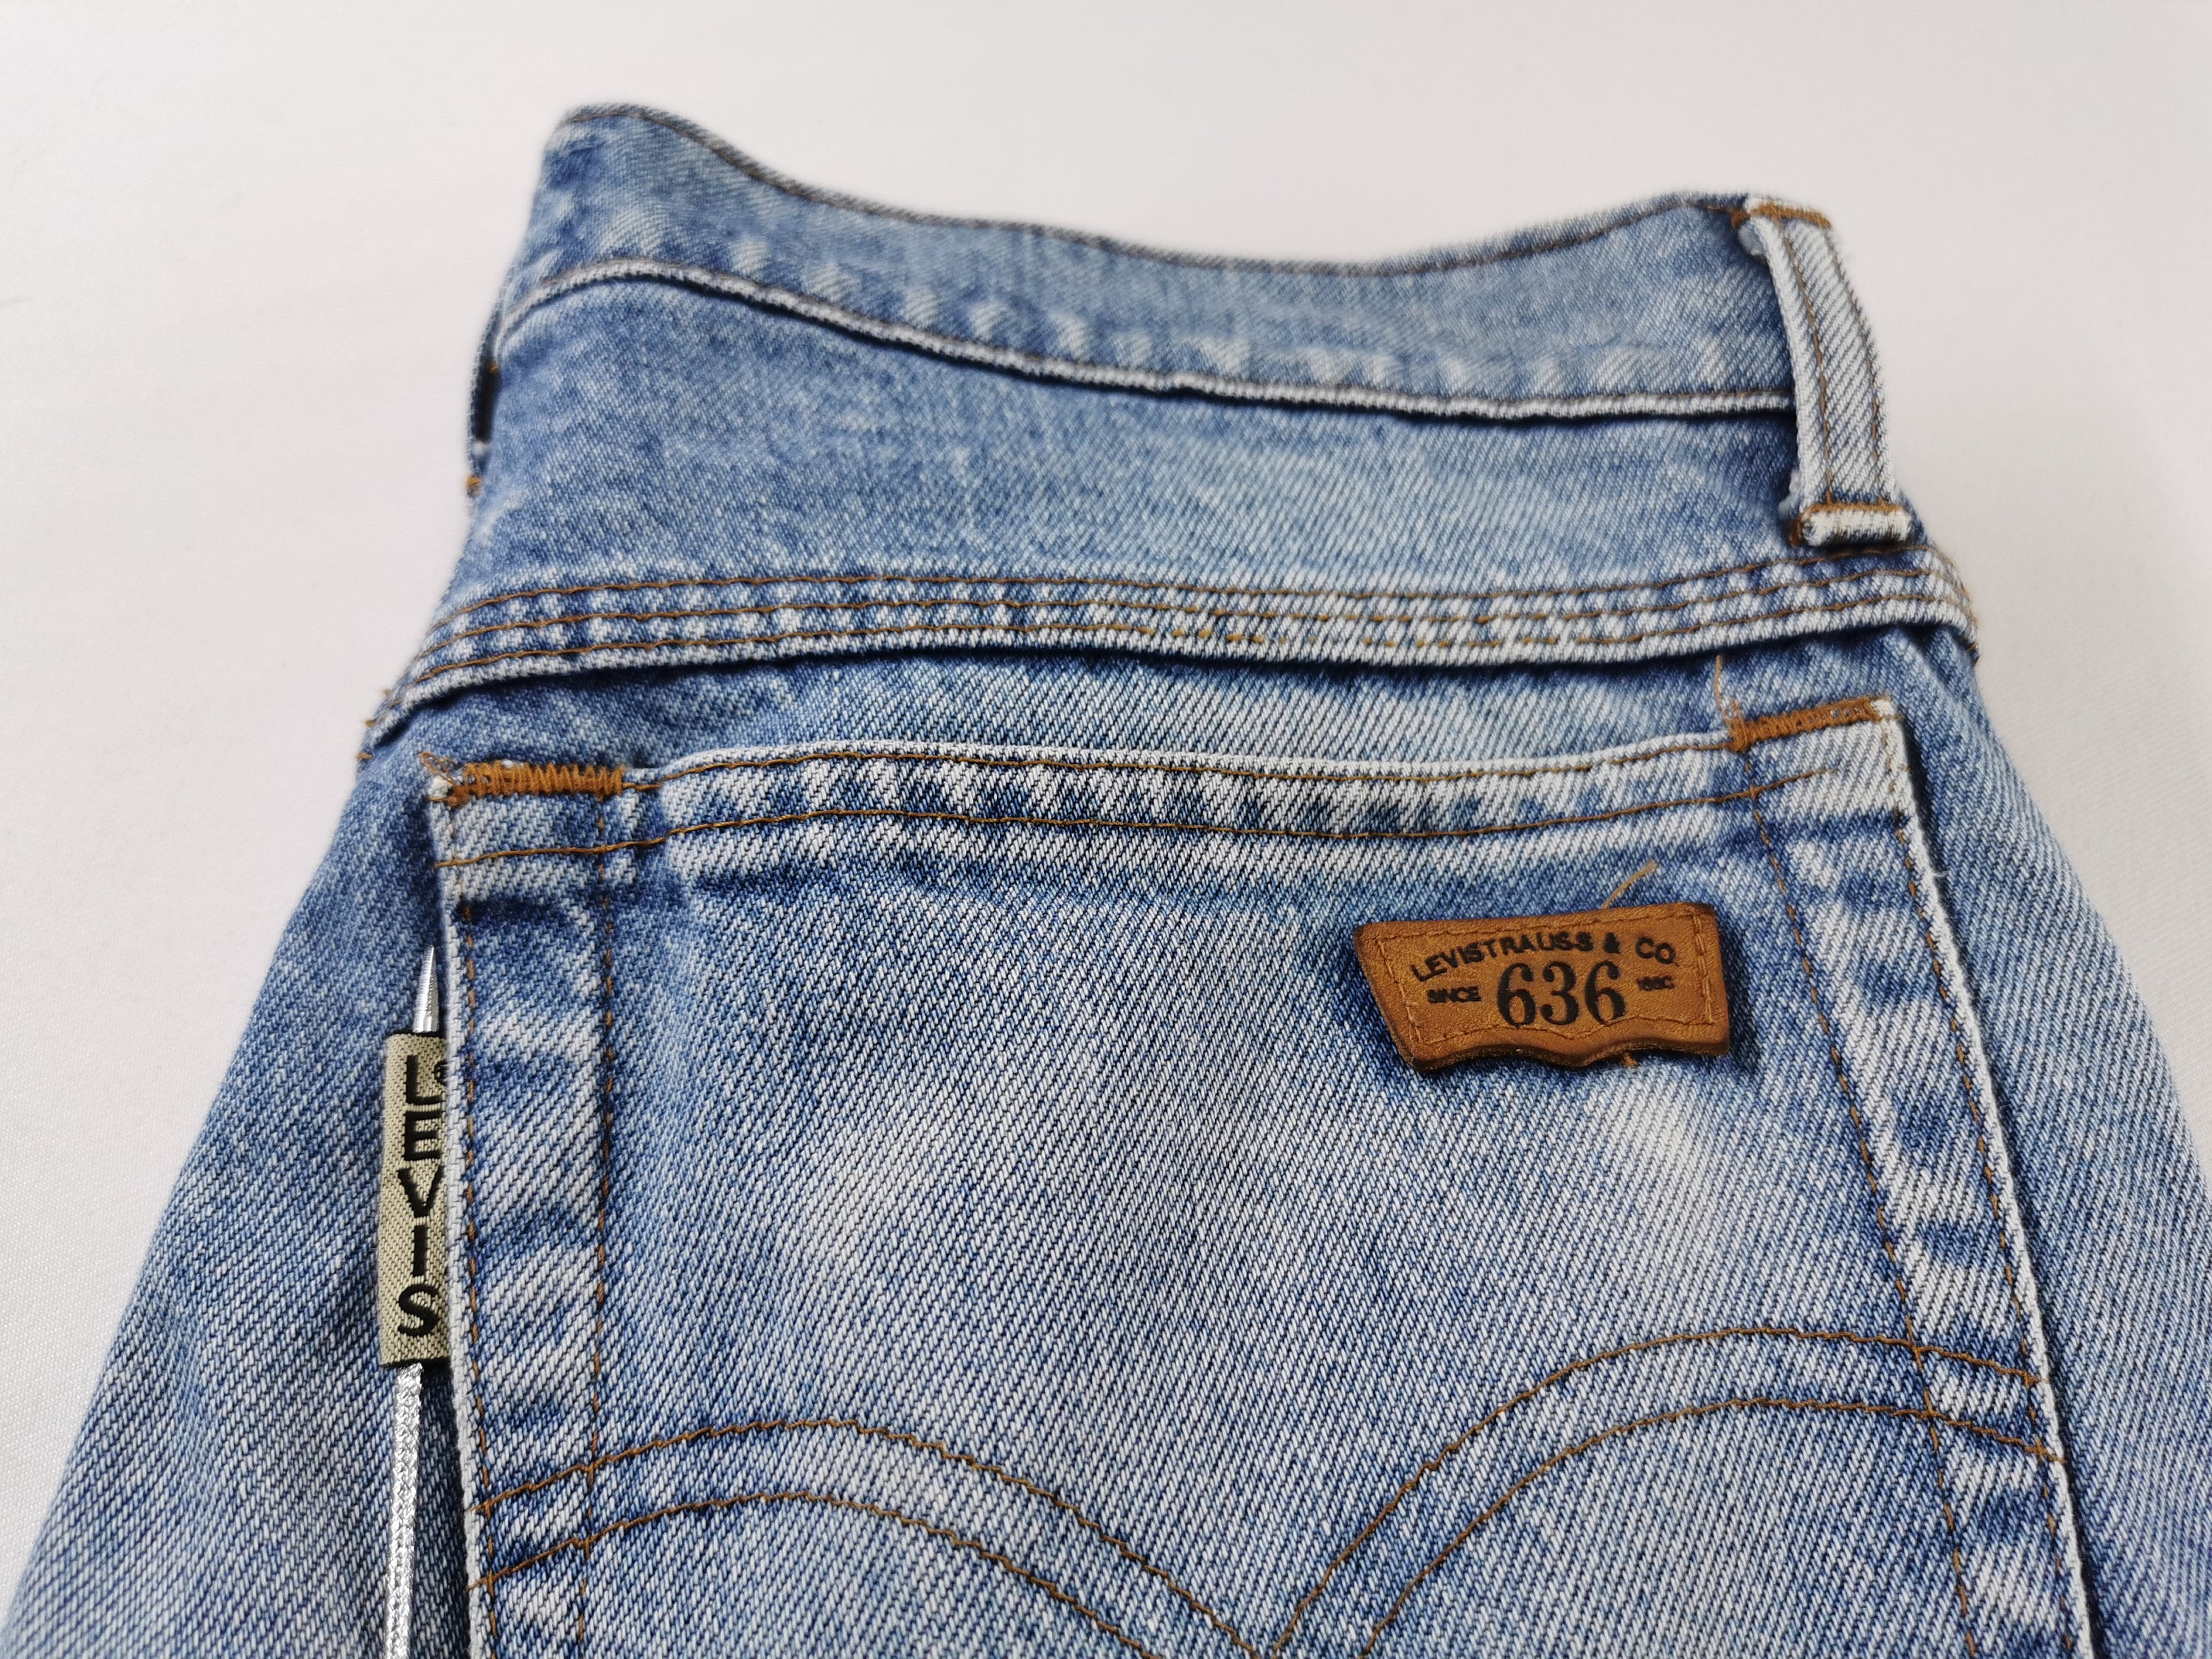 Levis Jeans Distressed Vintage Levis 636 Denim Levis 636 Made | Etsy